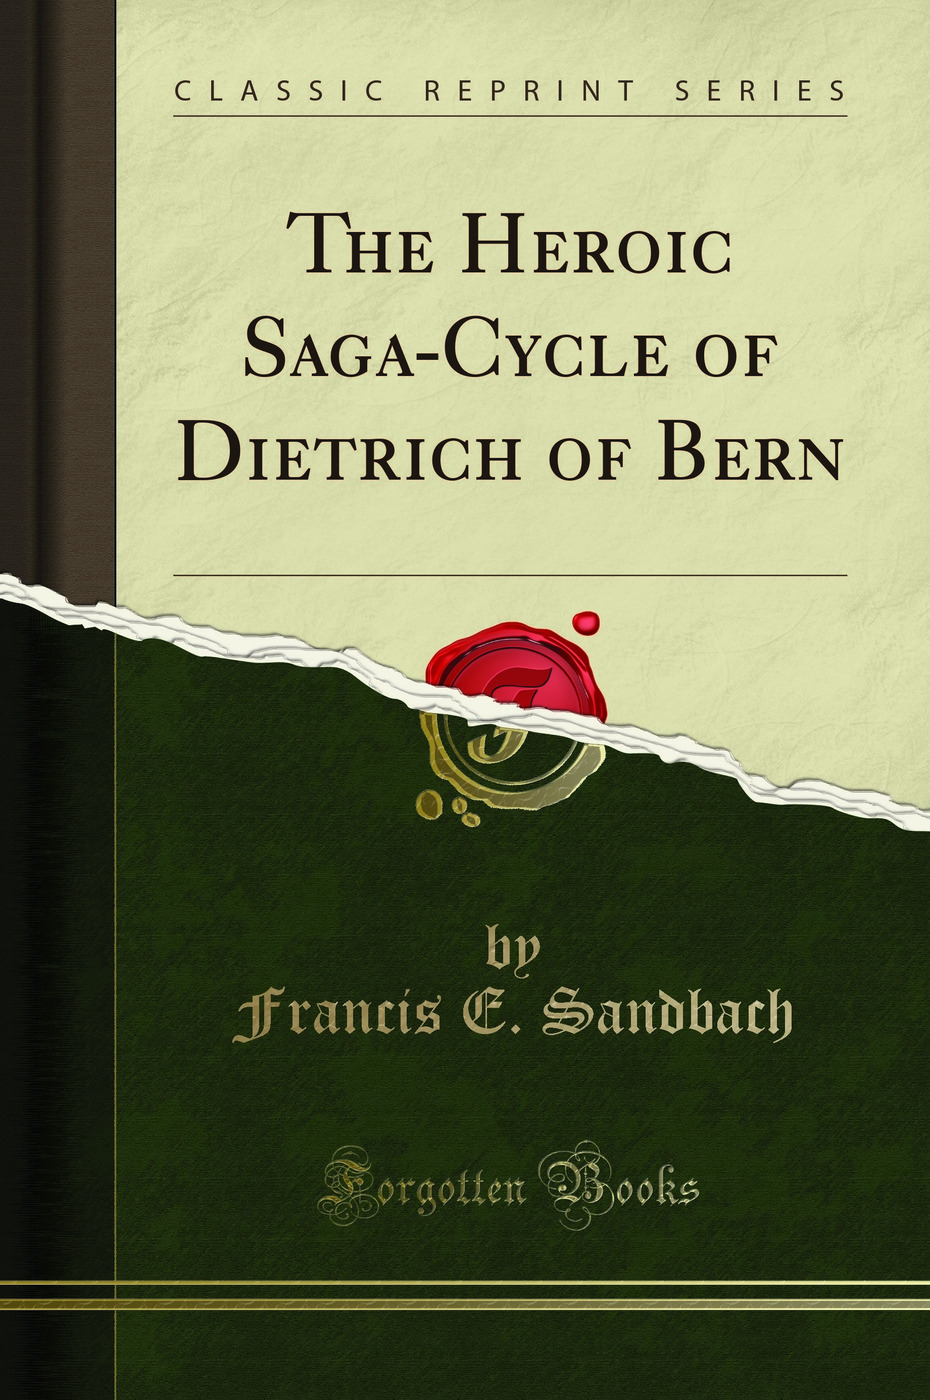 The Heroic Saga-Cycle of Dietrich of Bern (Classic Reprint) - Francis E. Sandbach